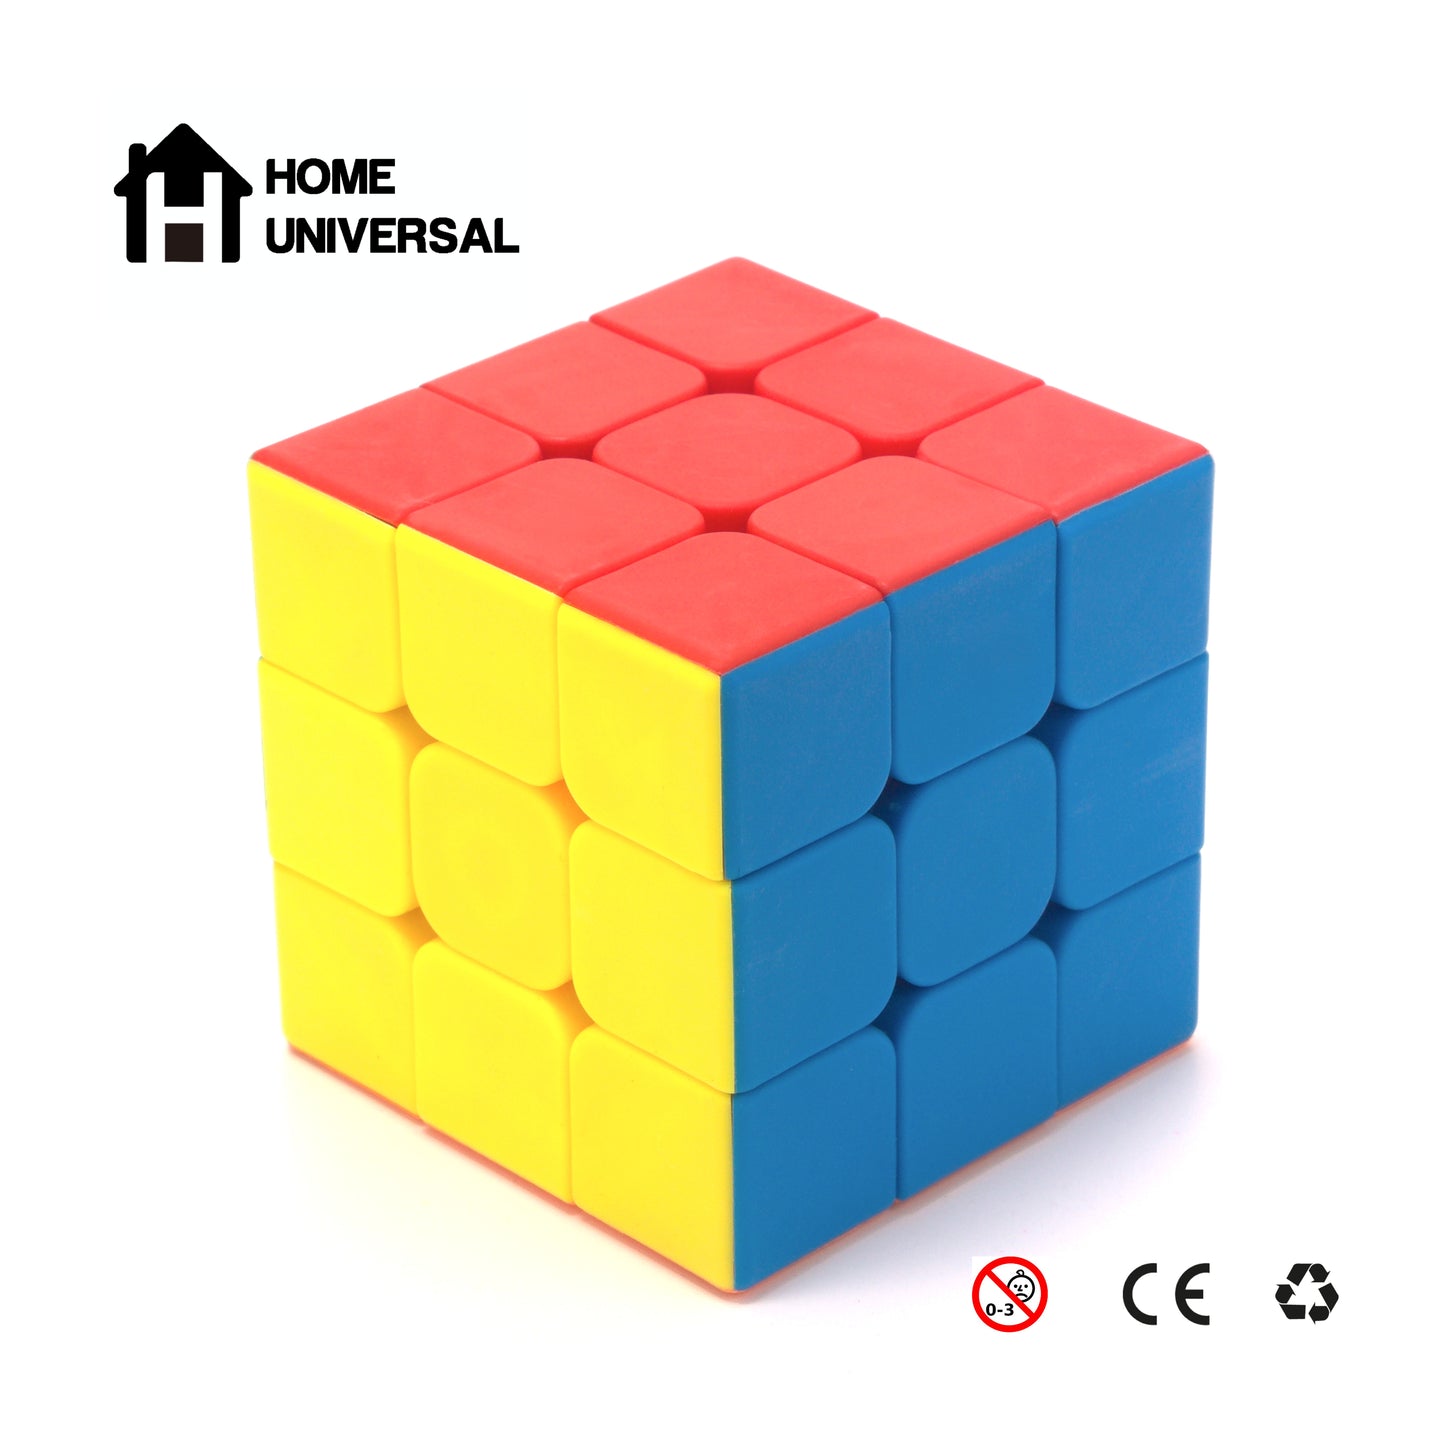 Home UNIVERSAL | Cubo Rompecabezas (3x3x3 Sin pegatina)